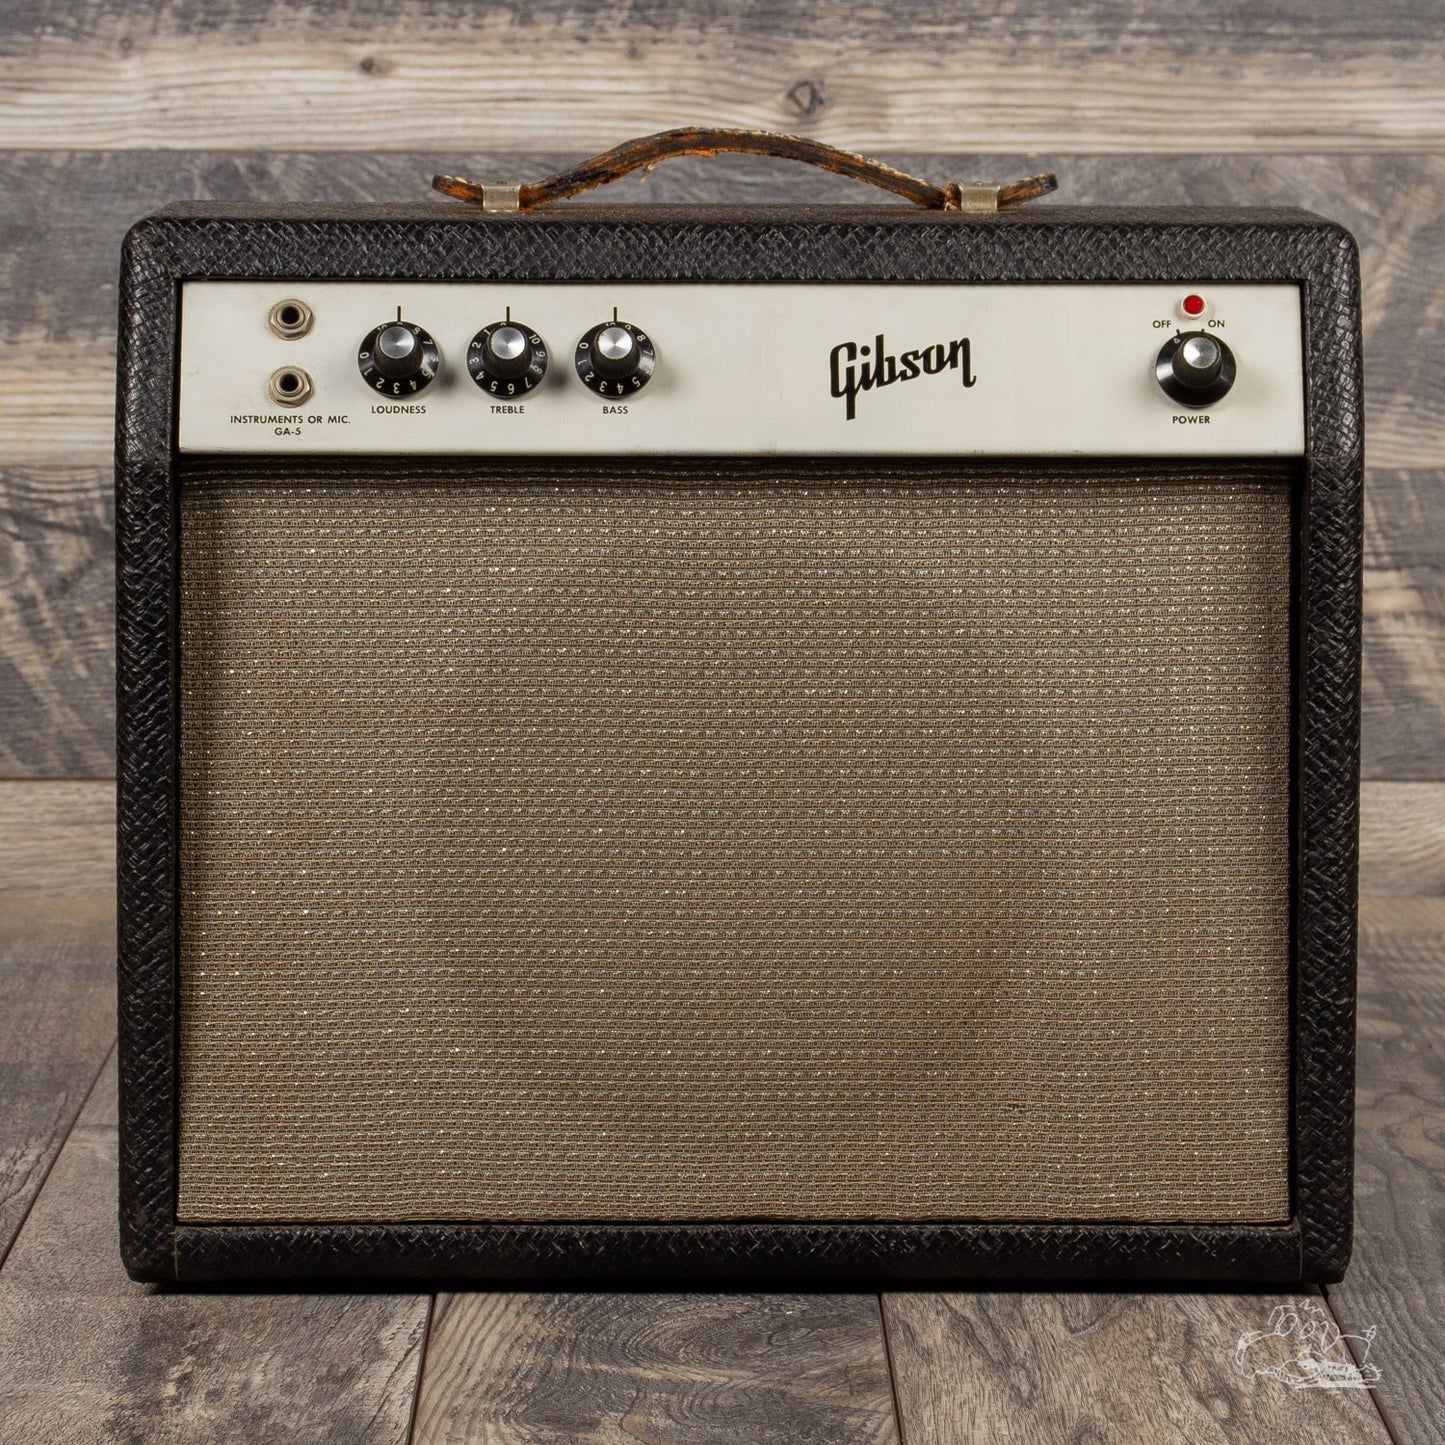 1966 Gibson GA-5 Skylark Amplifier